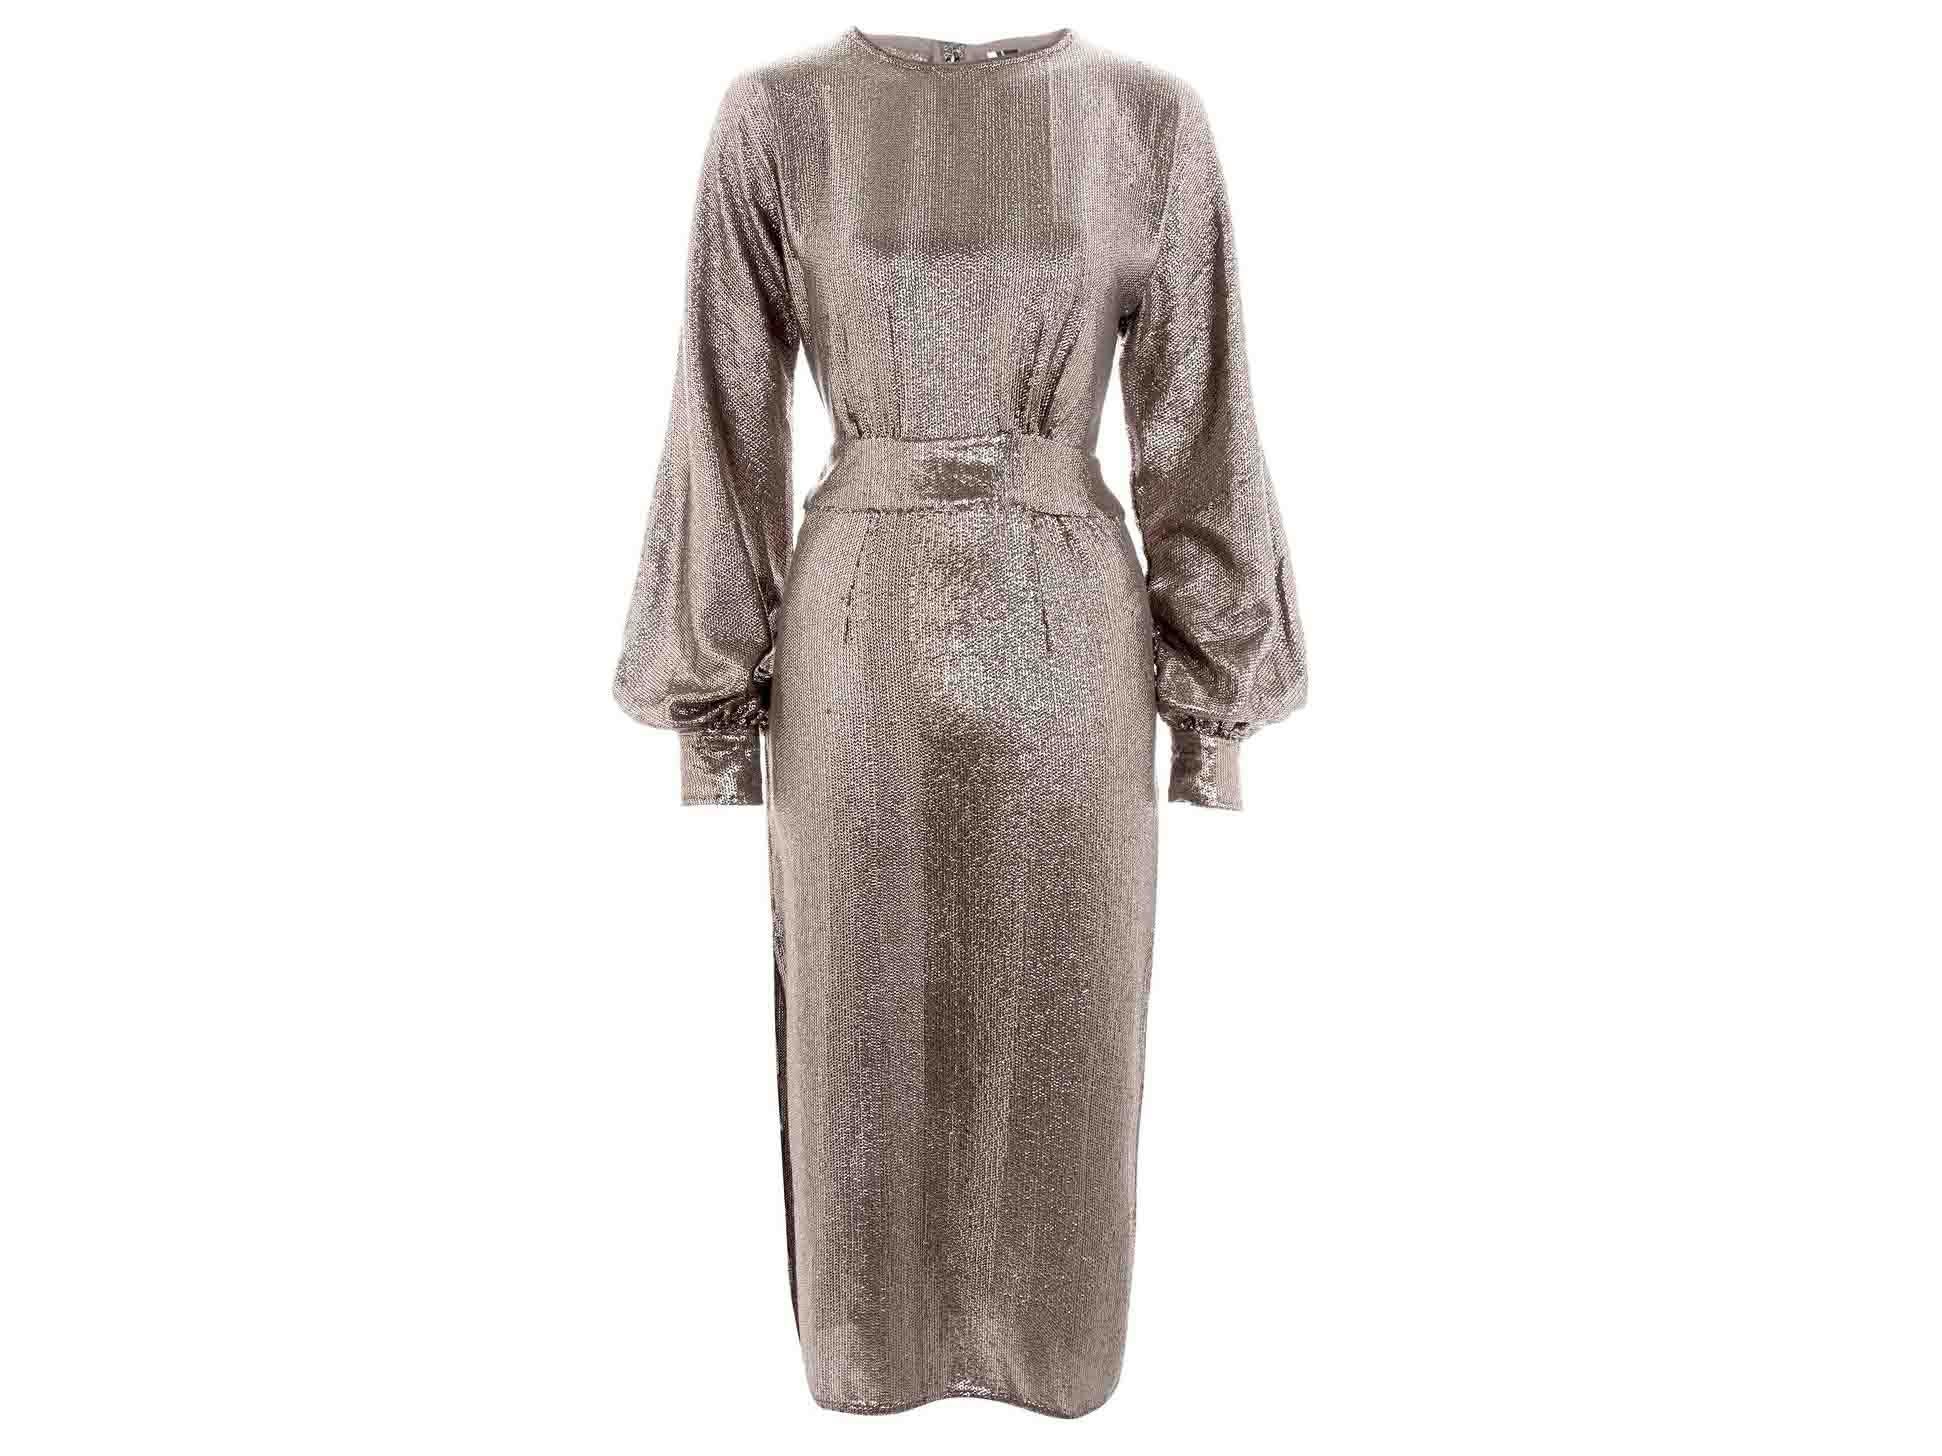 Silver Batwing Midi Shift Dress is casual yet elegant, £95, Topshop